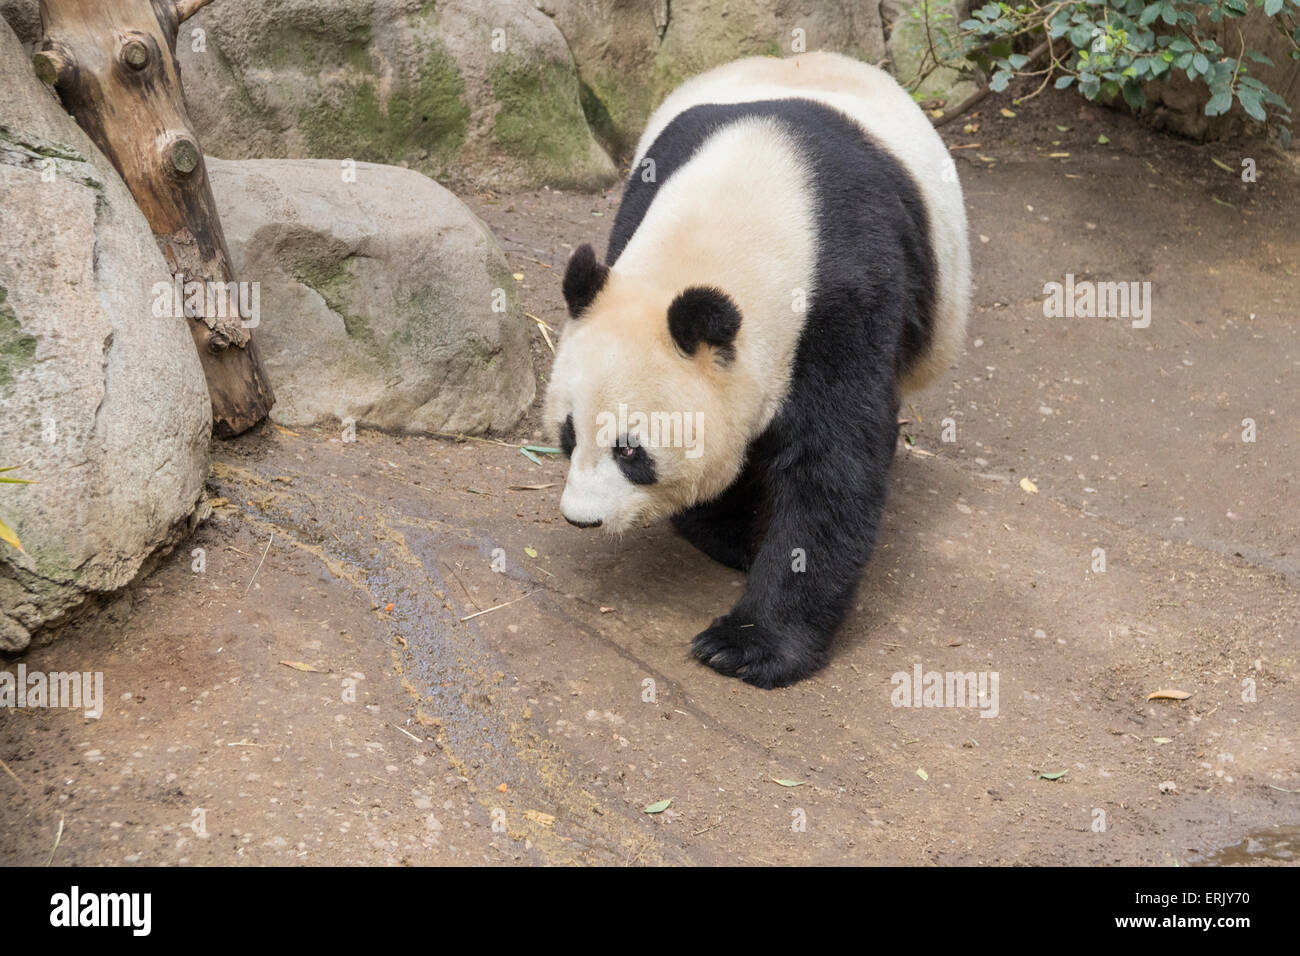 'Gigantesco Orso Panda' allo Zoo di San Diego. Foto Stock